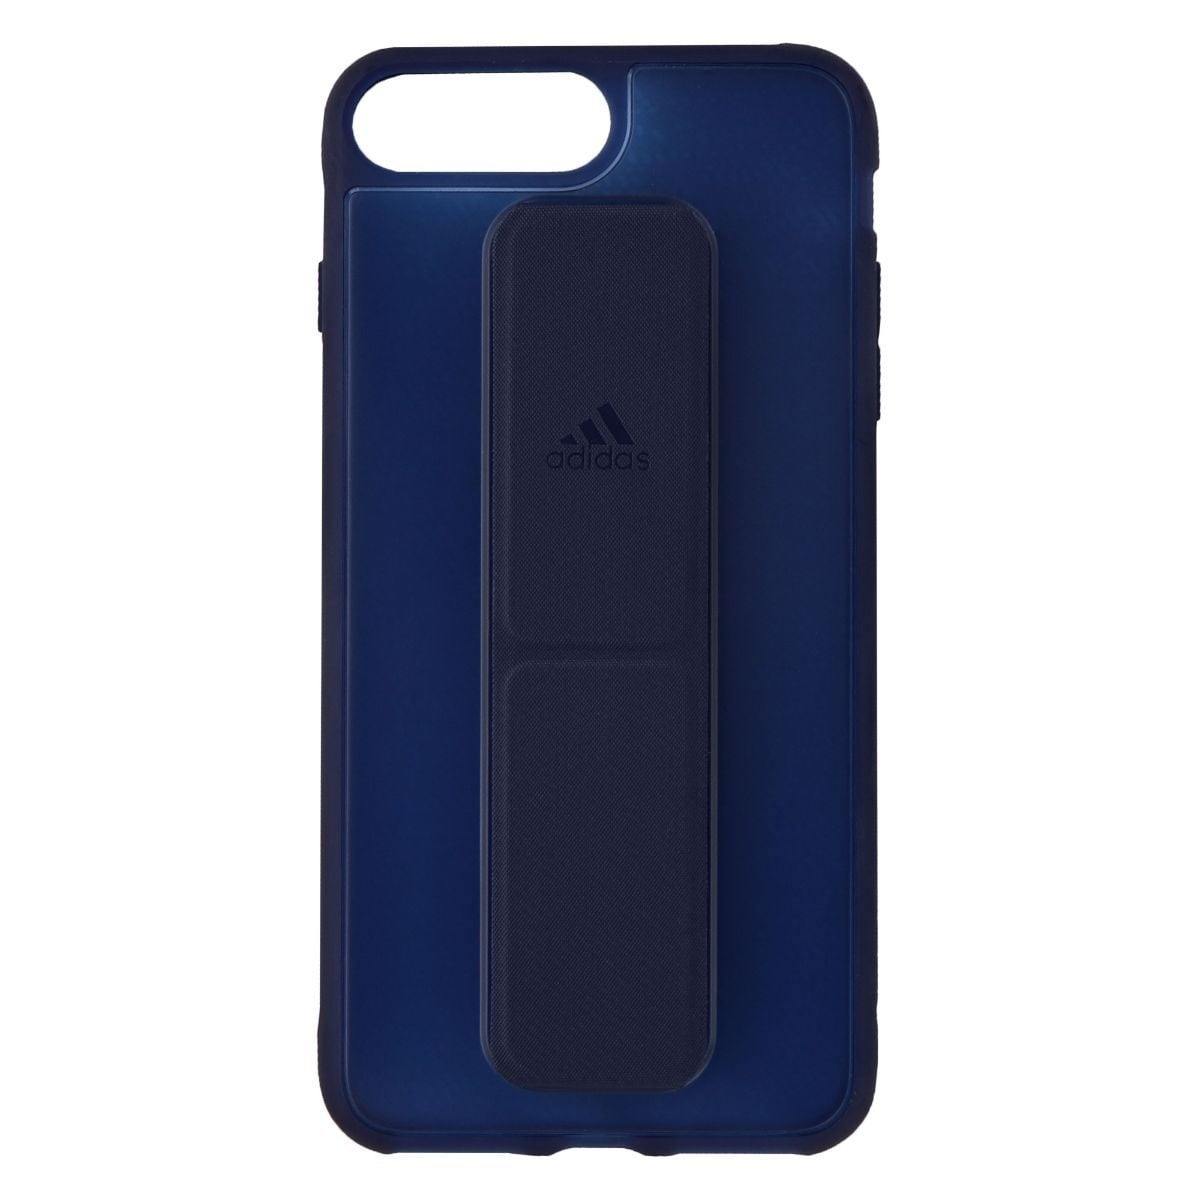 Transparant Bekwaamheid ketting Adidas Grip Case for iPhone 6 Plus / 6s Plus / 7 Plus - Blue NEW -  Walmart.com